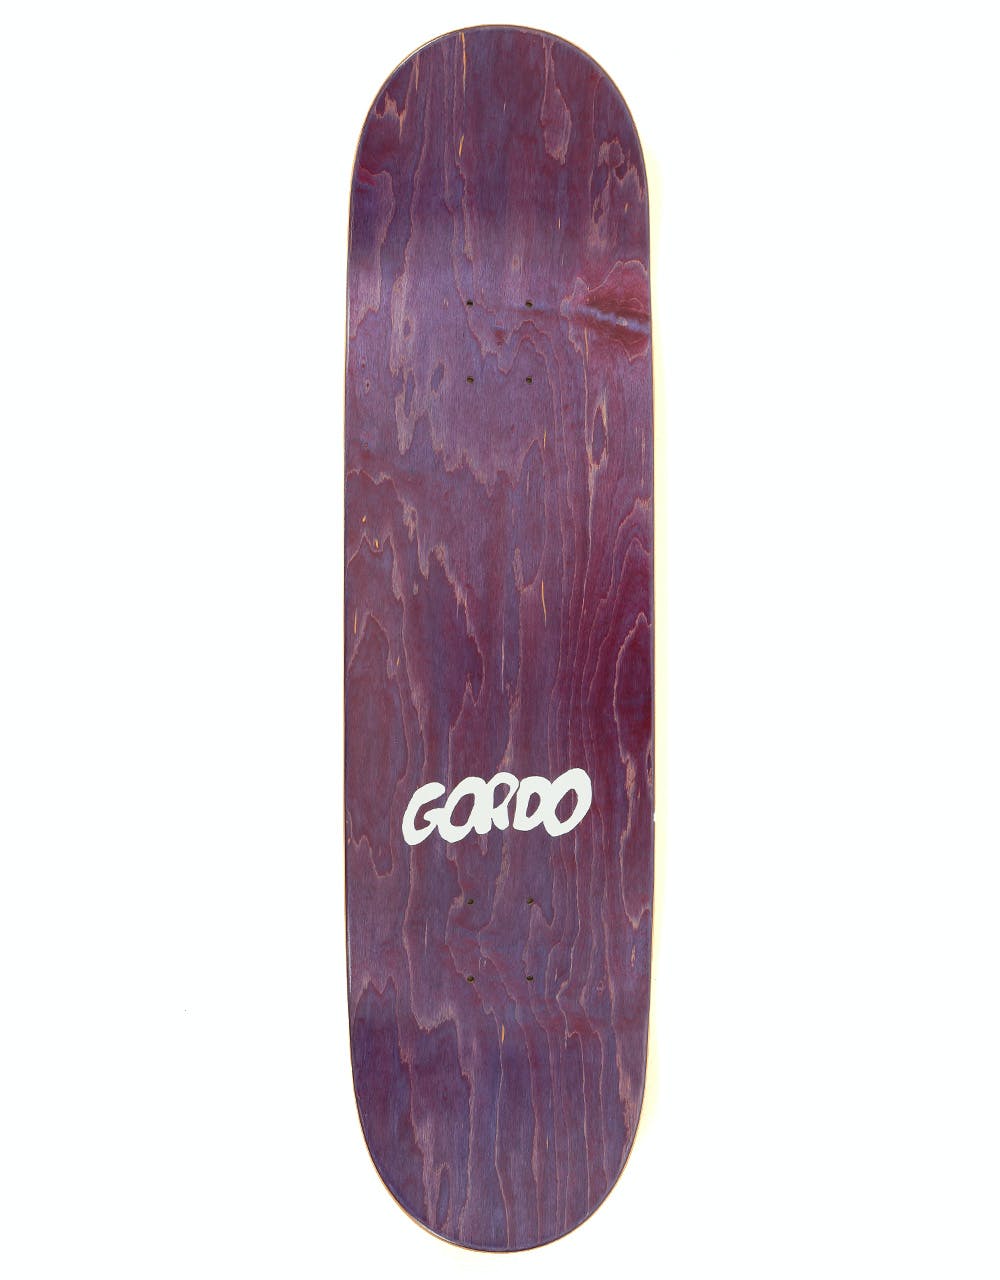 Lovenskate Thackeray Gordo Skateboard Deck - 8.5"